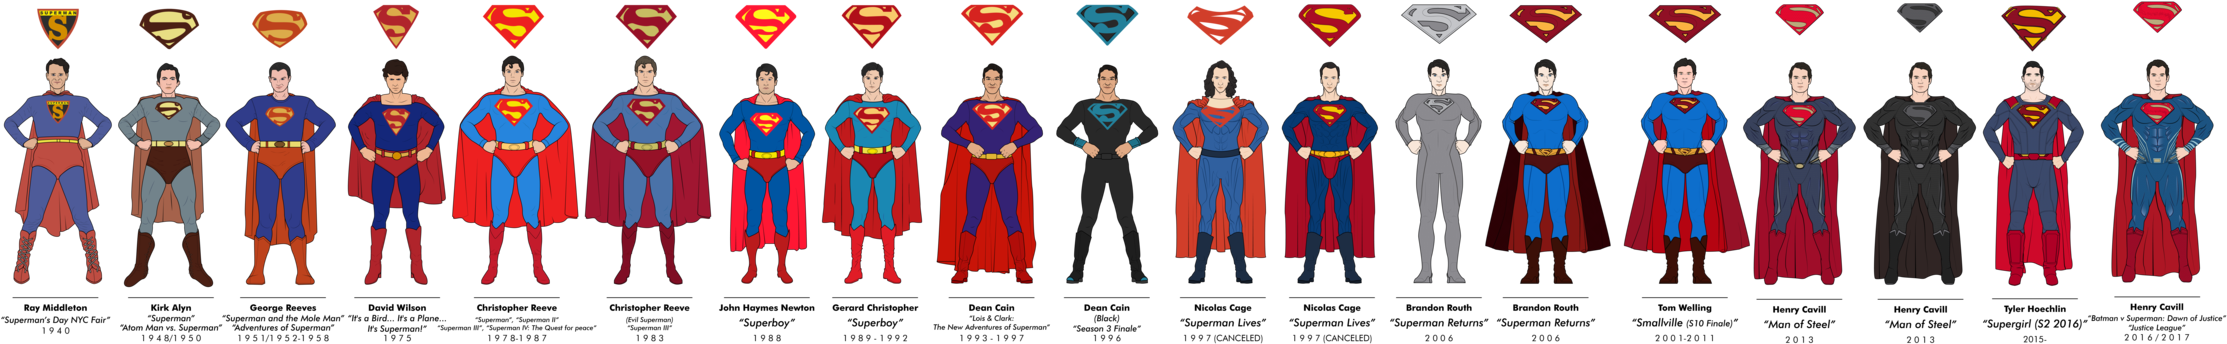 Superman Evolution By Efrajoey1 - Evolution Of Superman Costume (2243x355)